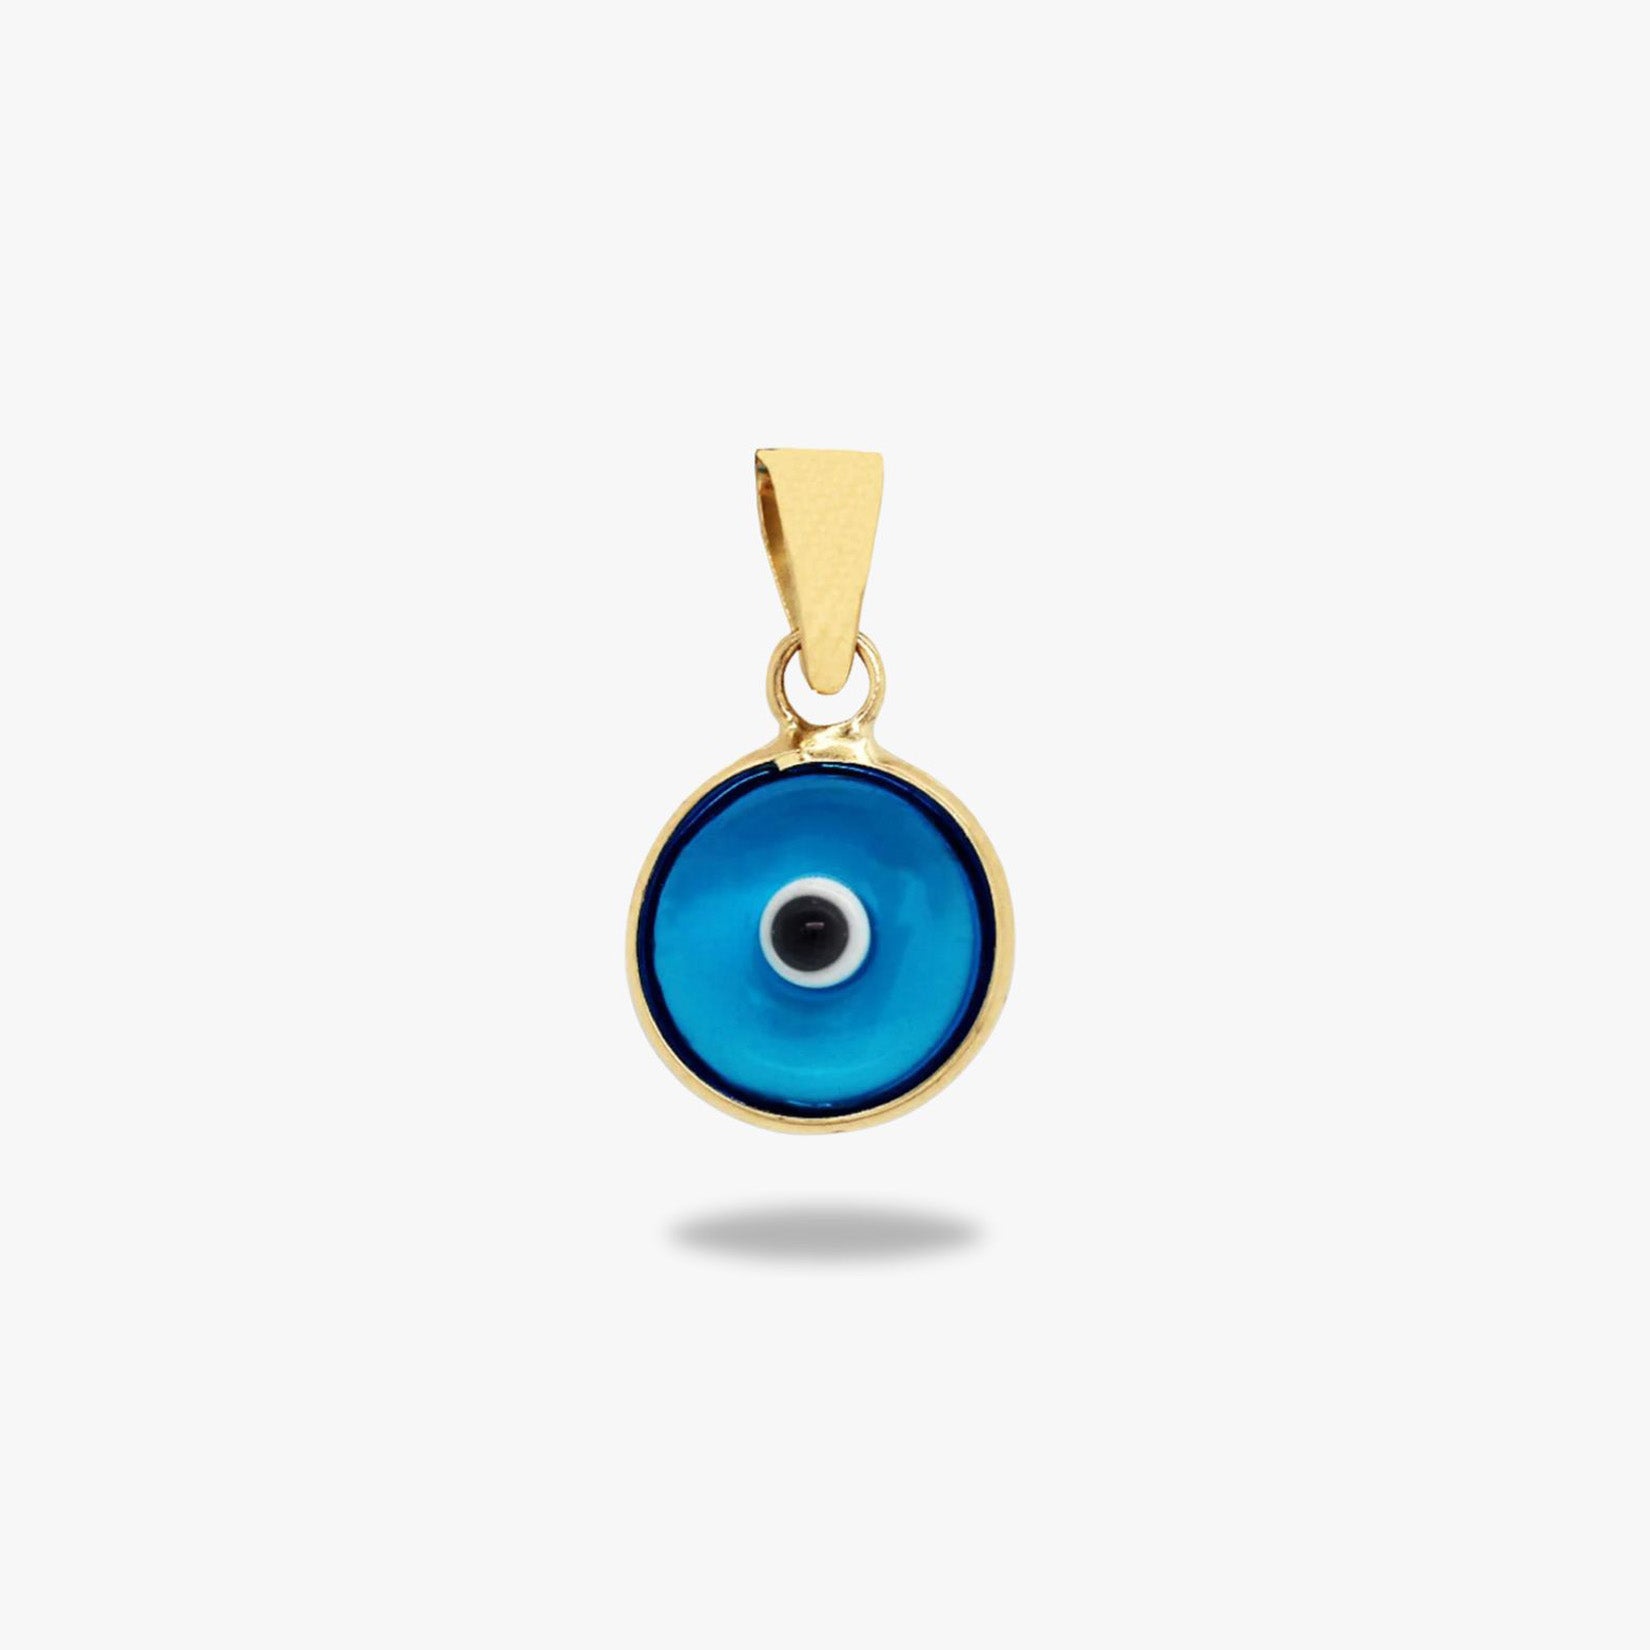 Blue Evil Eye Pendant Necklace in 14K Gold